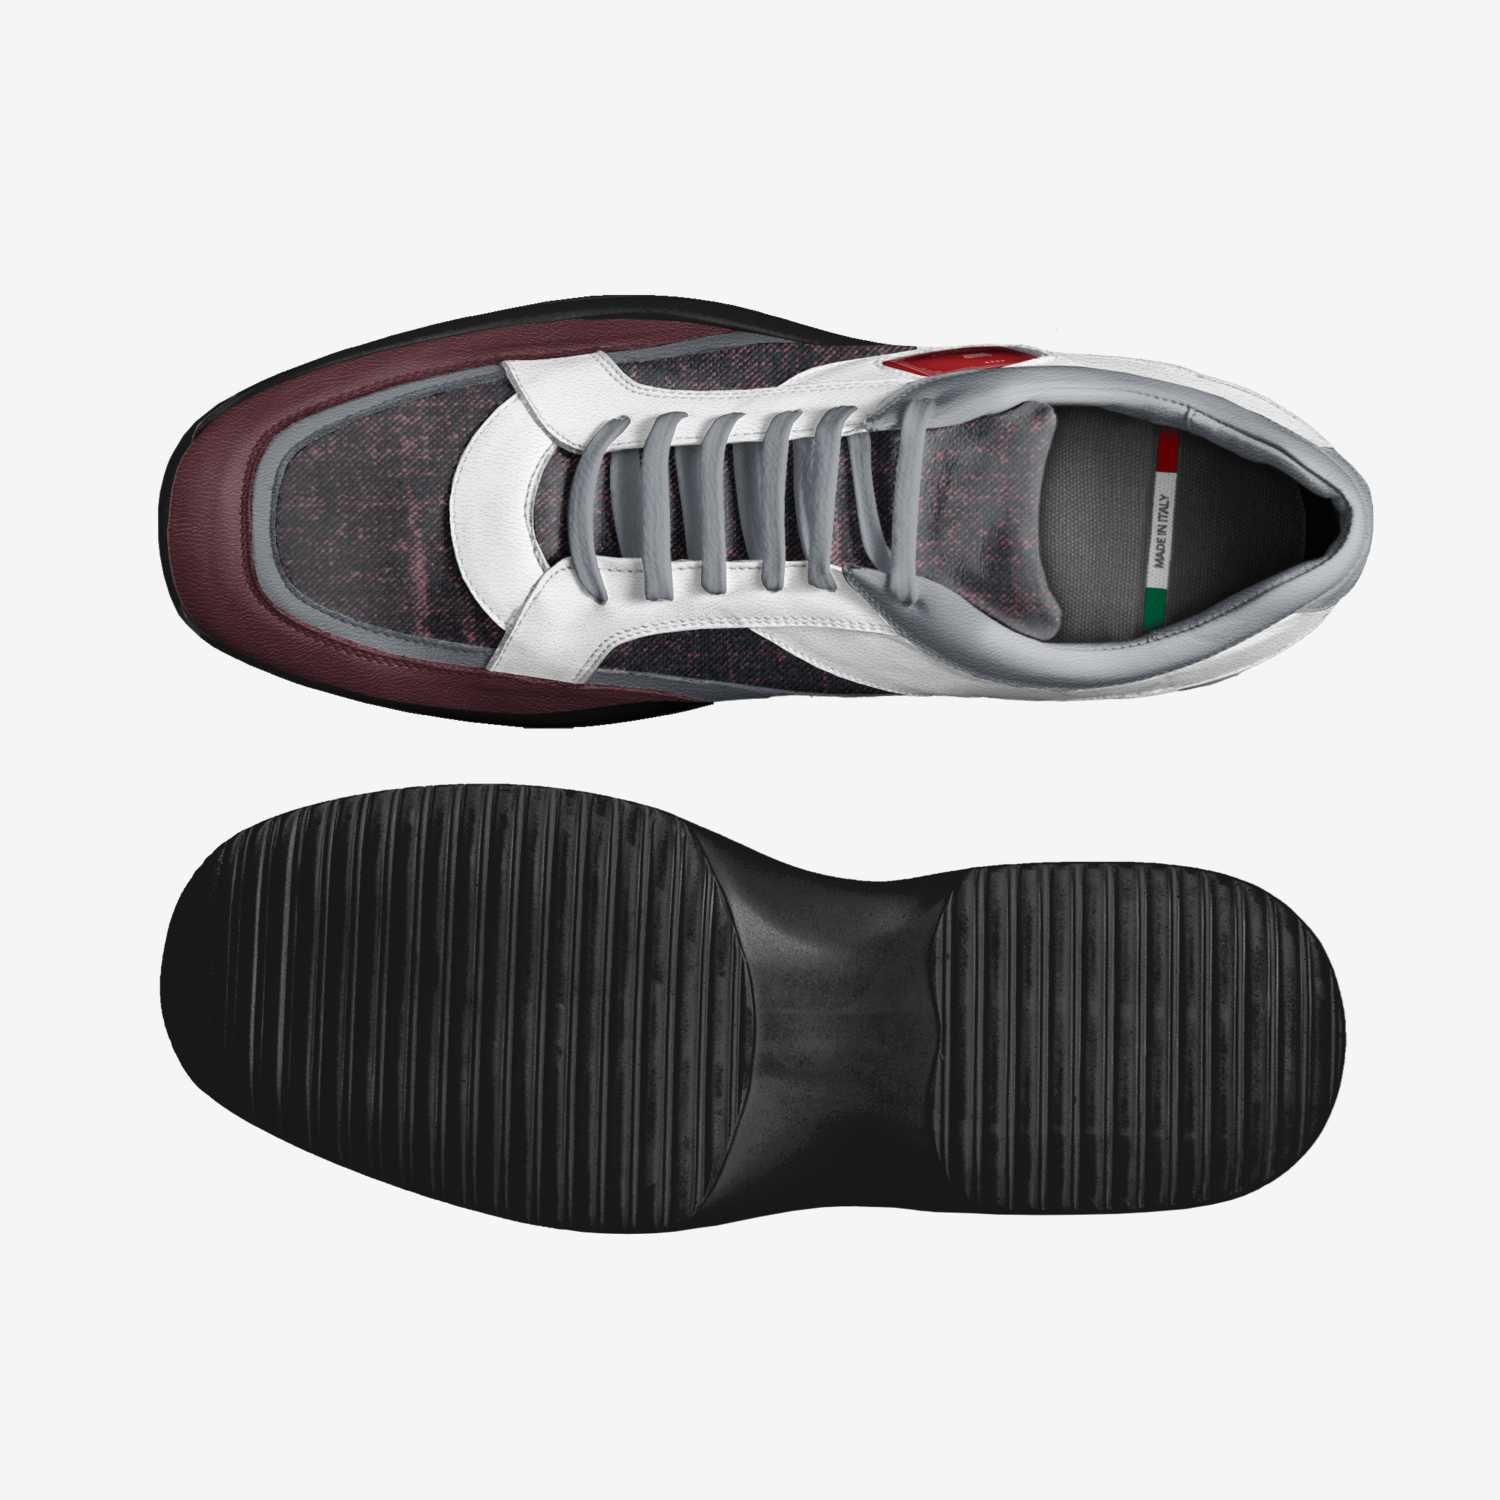 Omnip | A Custom Shoe concept by Arthur Simon